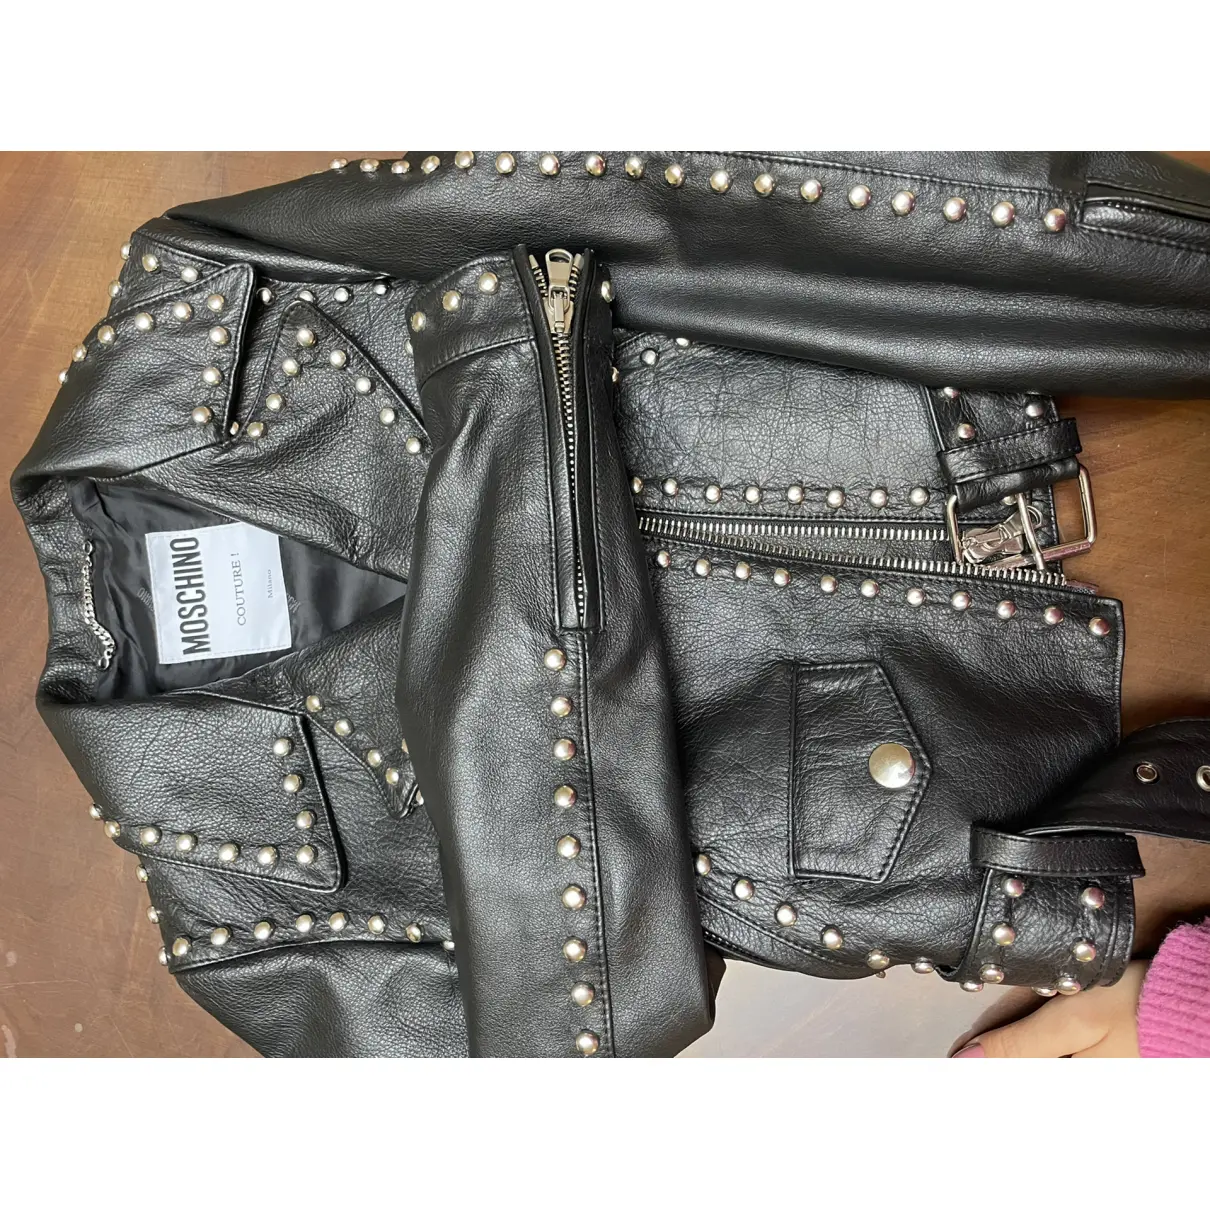 Leather jacket Moschino